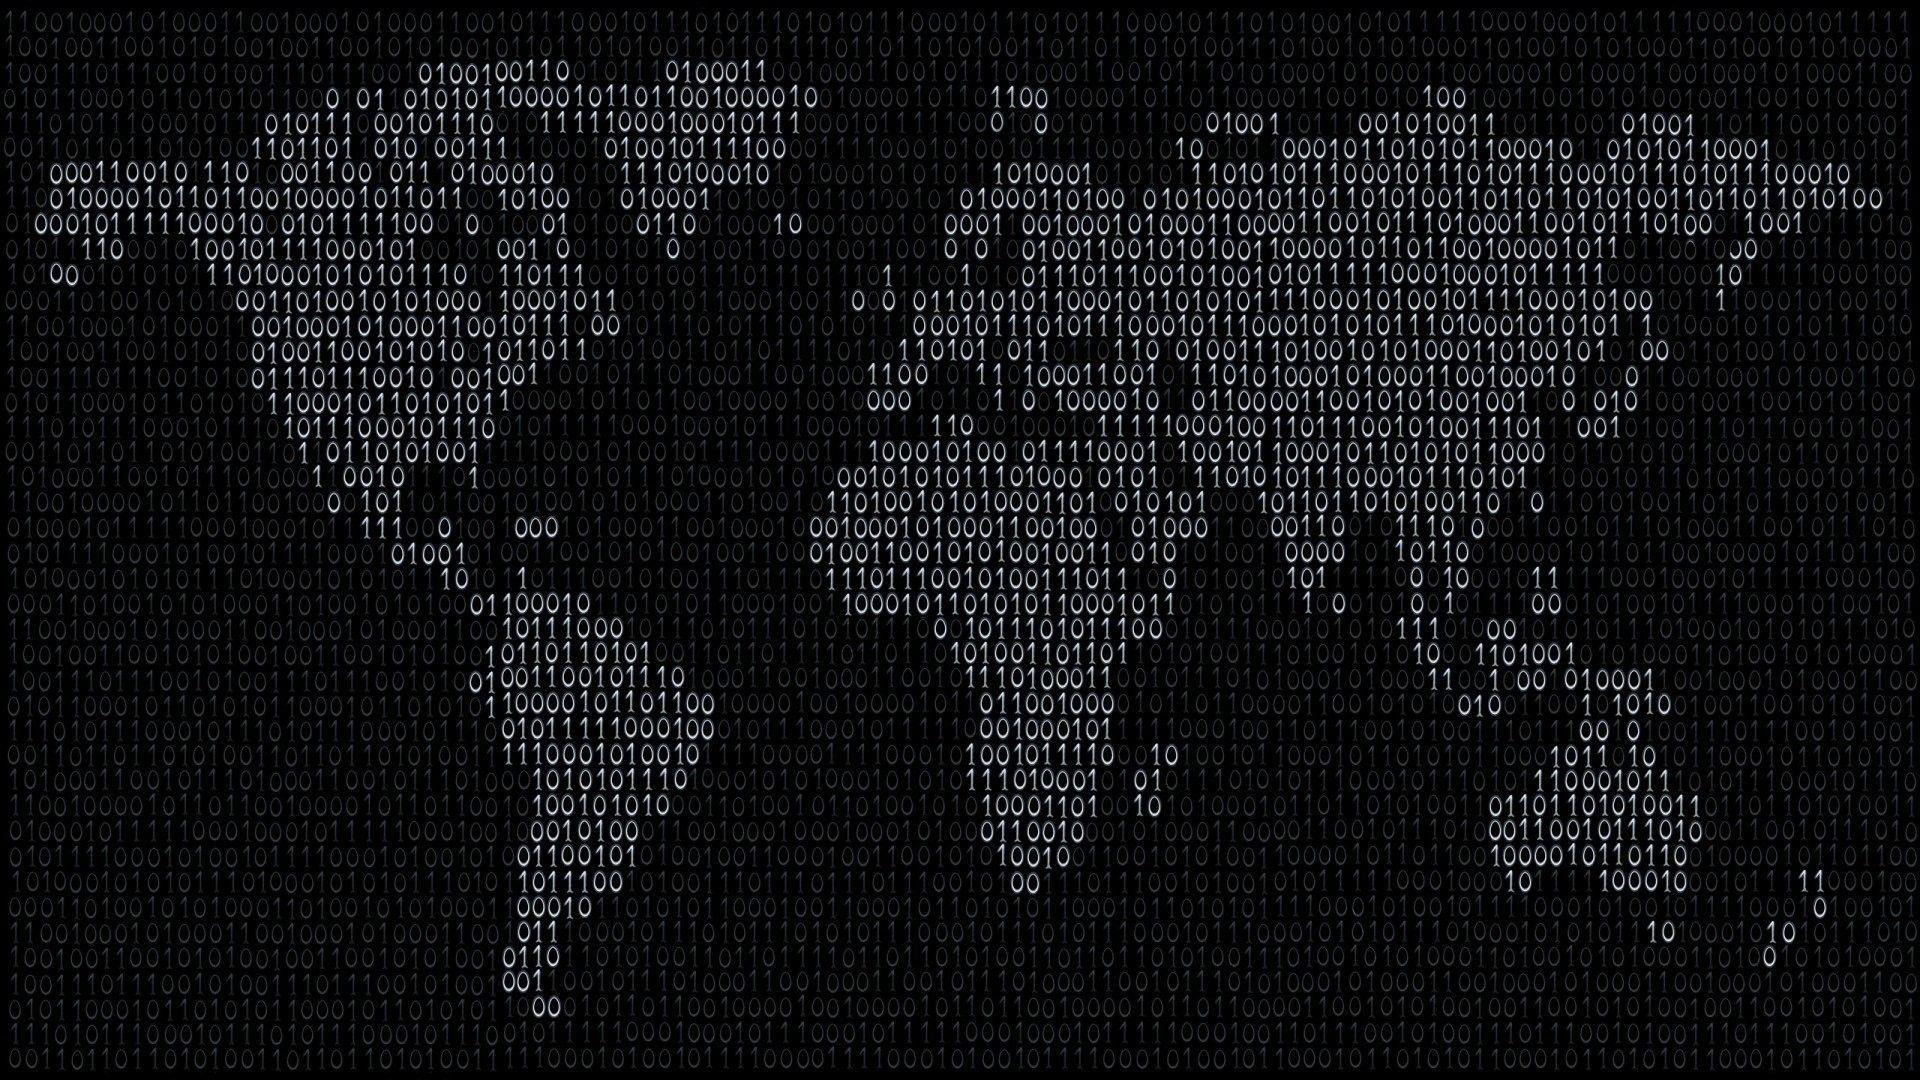 World Map 4k Wallpapers Wallpaper Cave